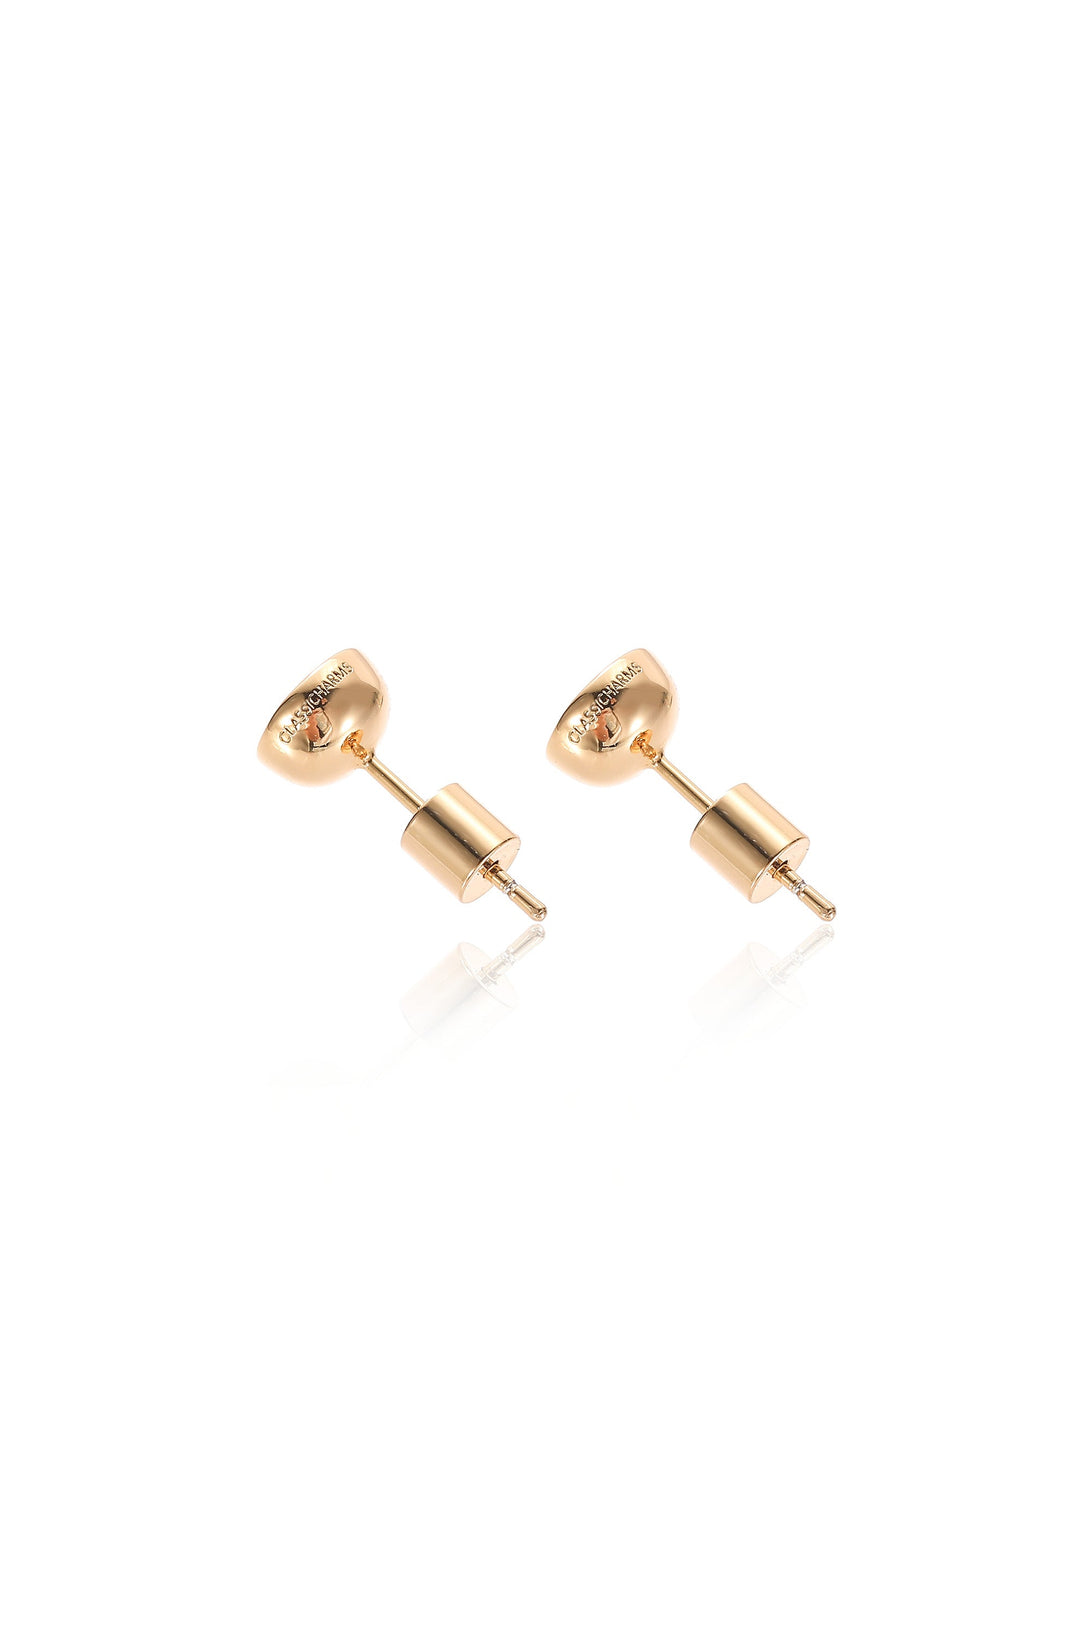 Aurora Gold Bezel Set Onyx Black Solitaire Stud Earrings - Classicharms